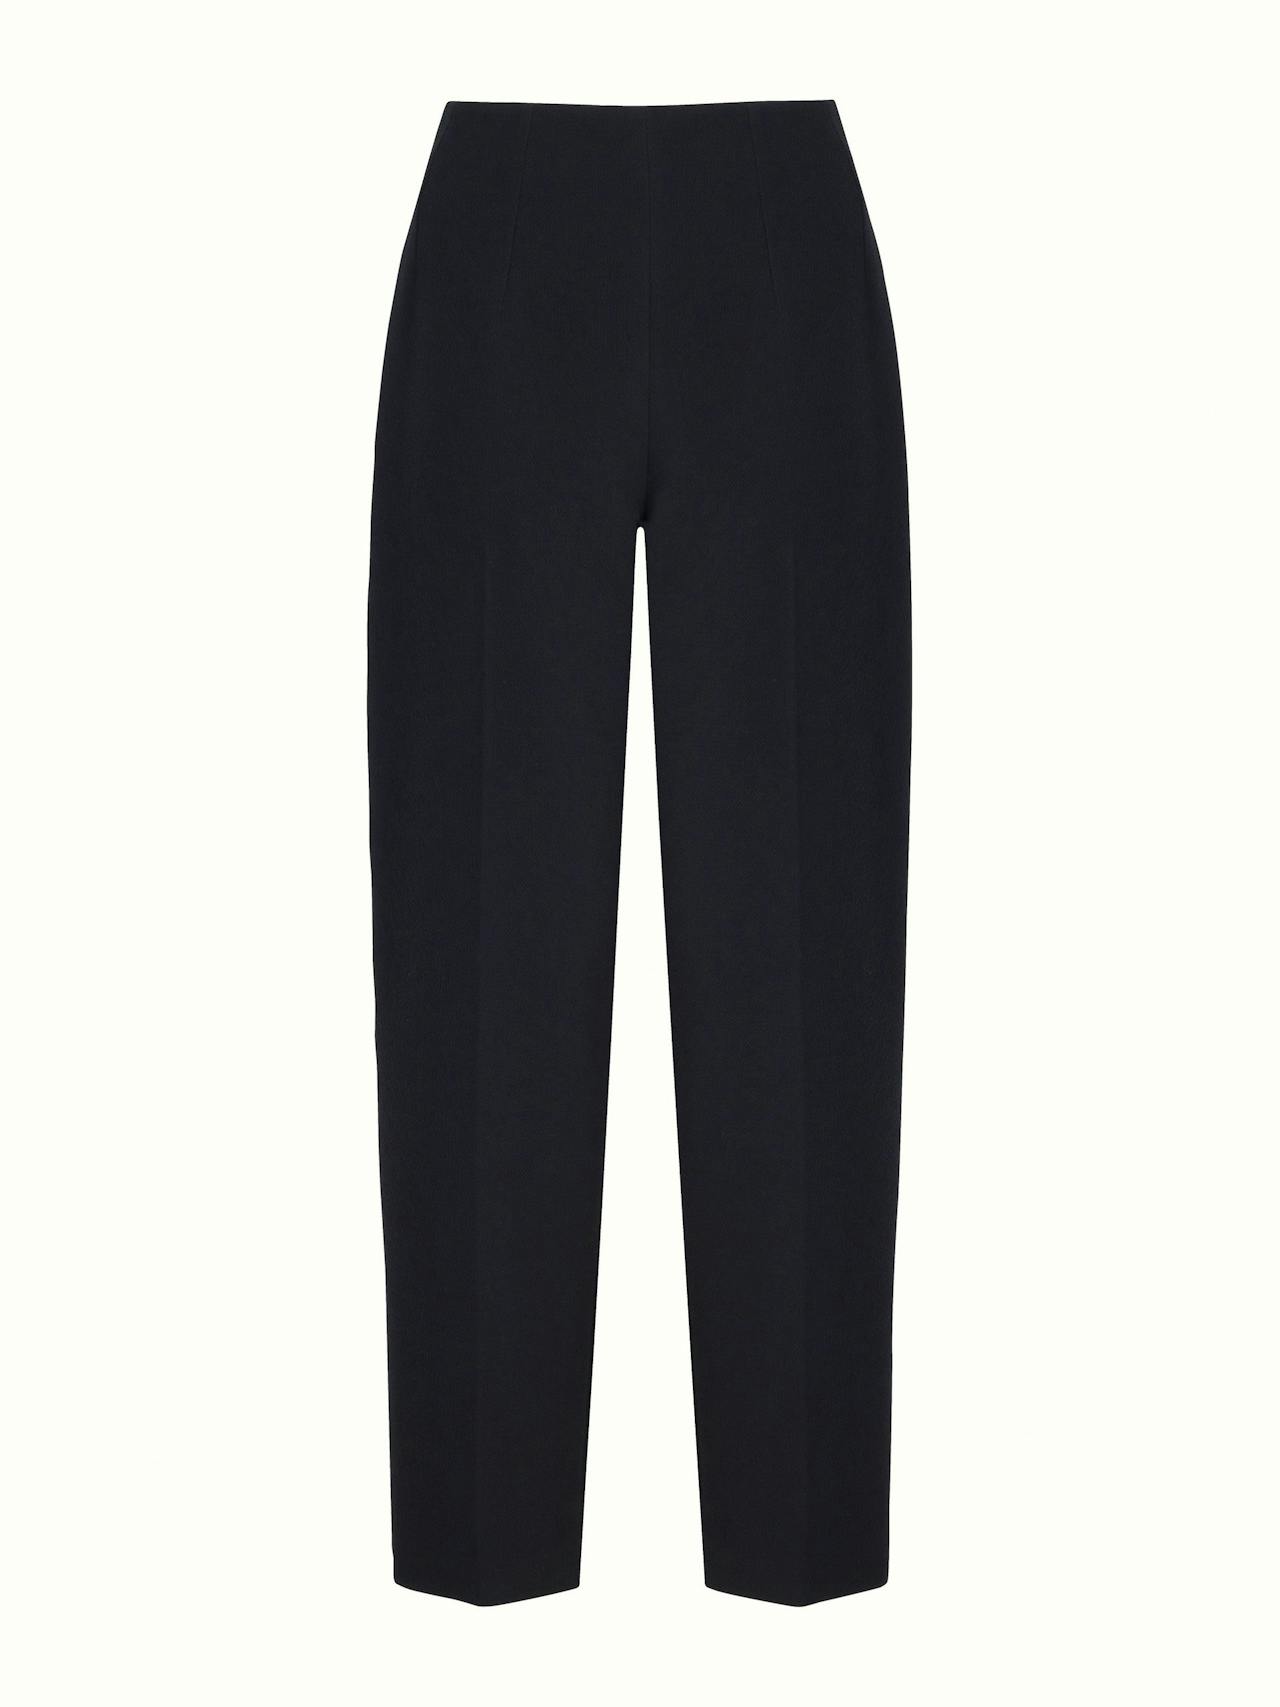 Arabella trousers in black double crepe